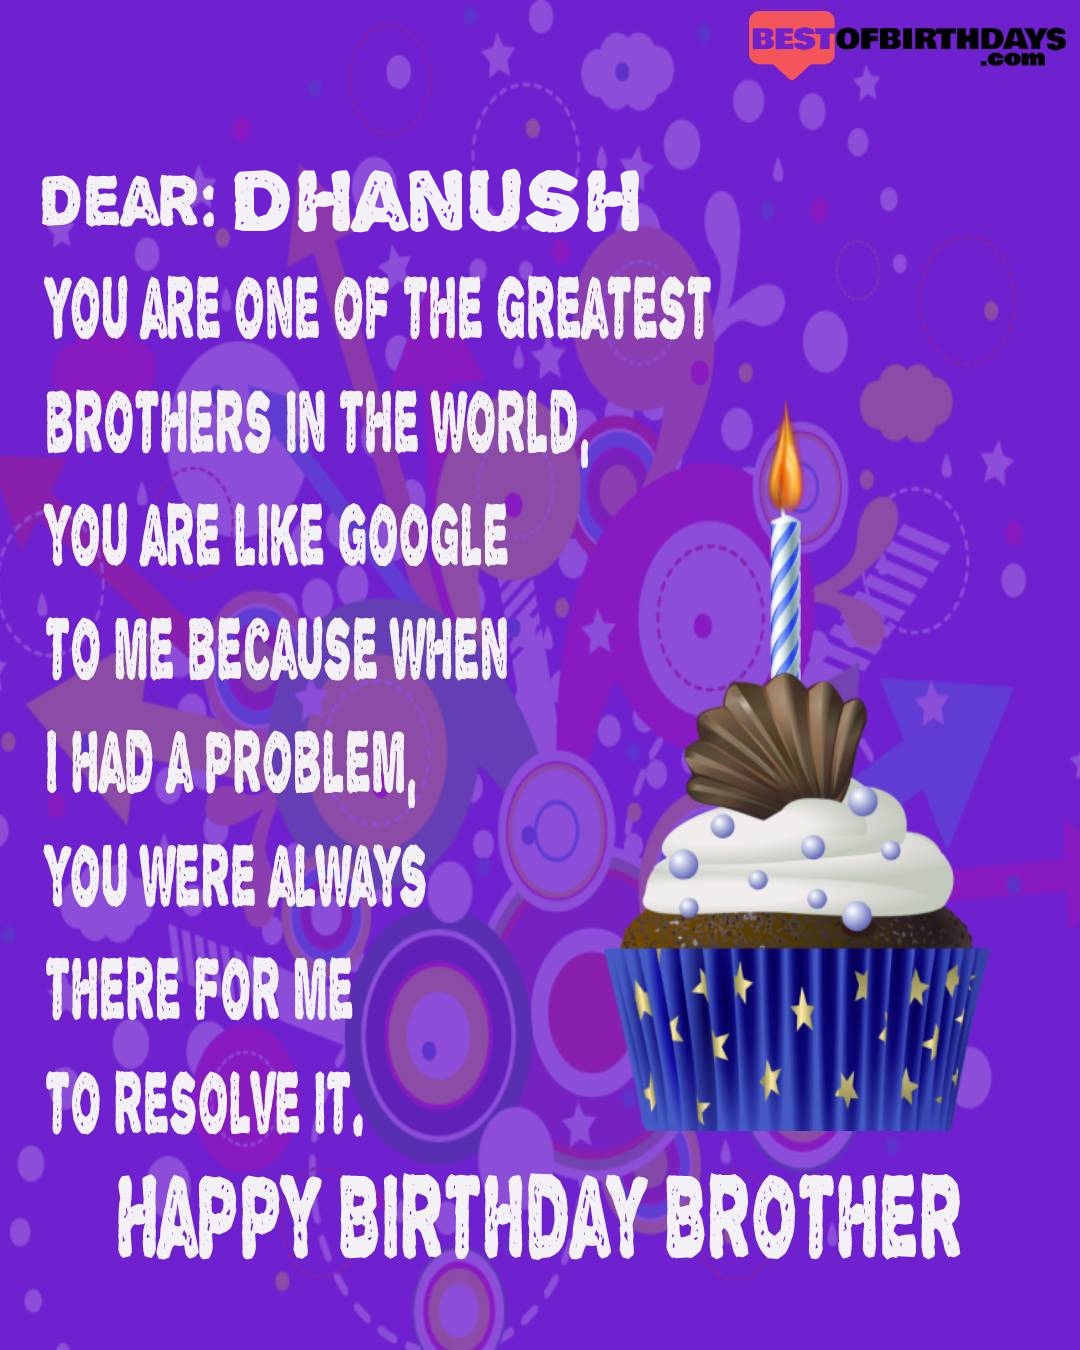 Happy birthday dhanush bhai brother bro